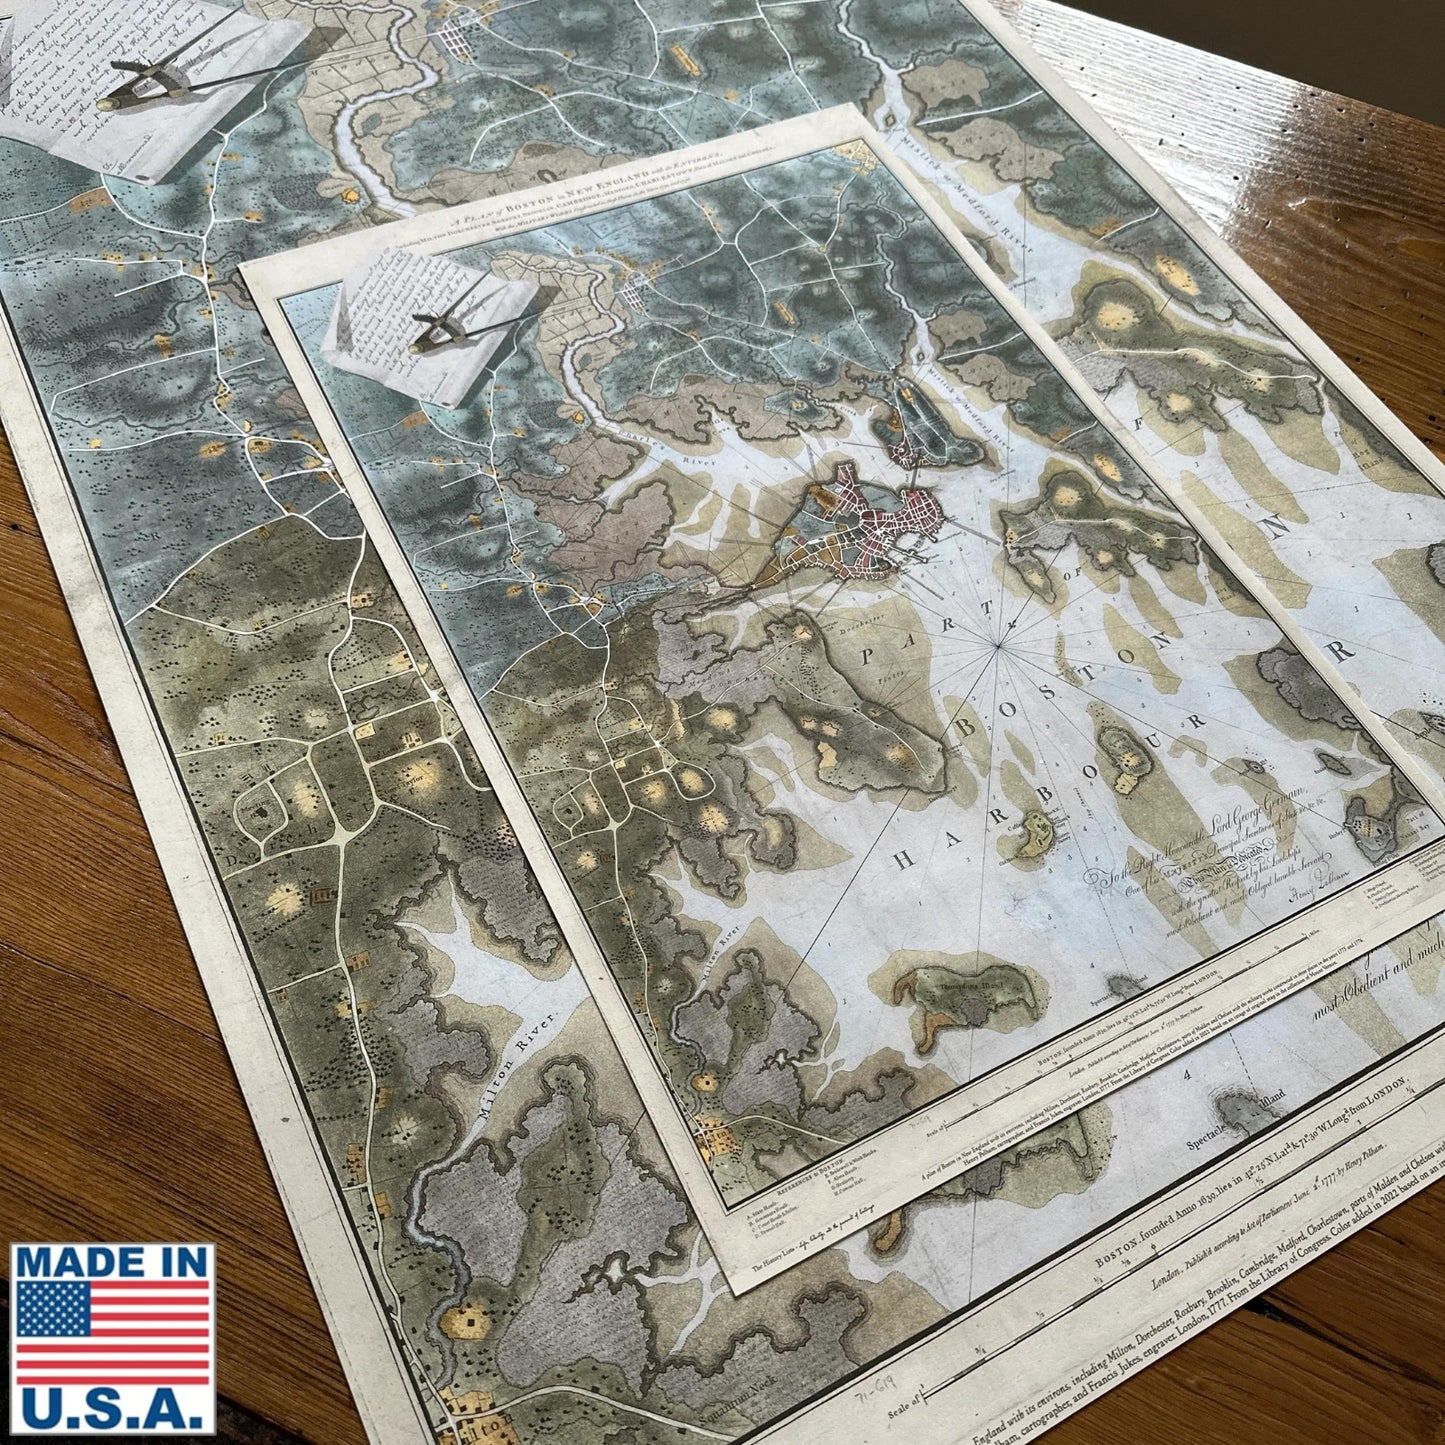 Boston Under Siege: Henry Pelham's Boston 1775-1776 colored aquatint map in an archival, full-sized print